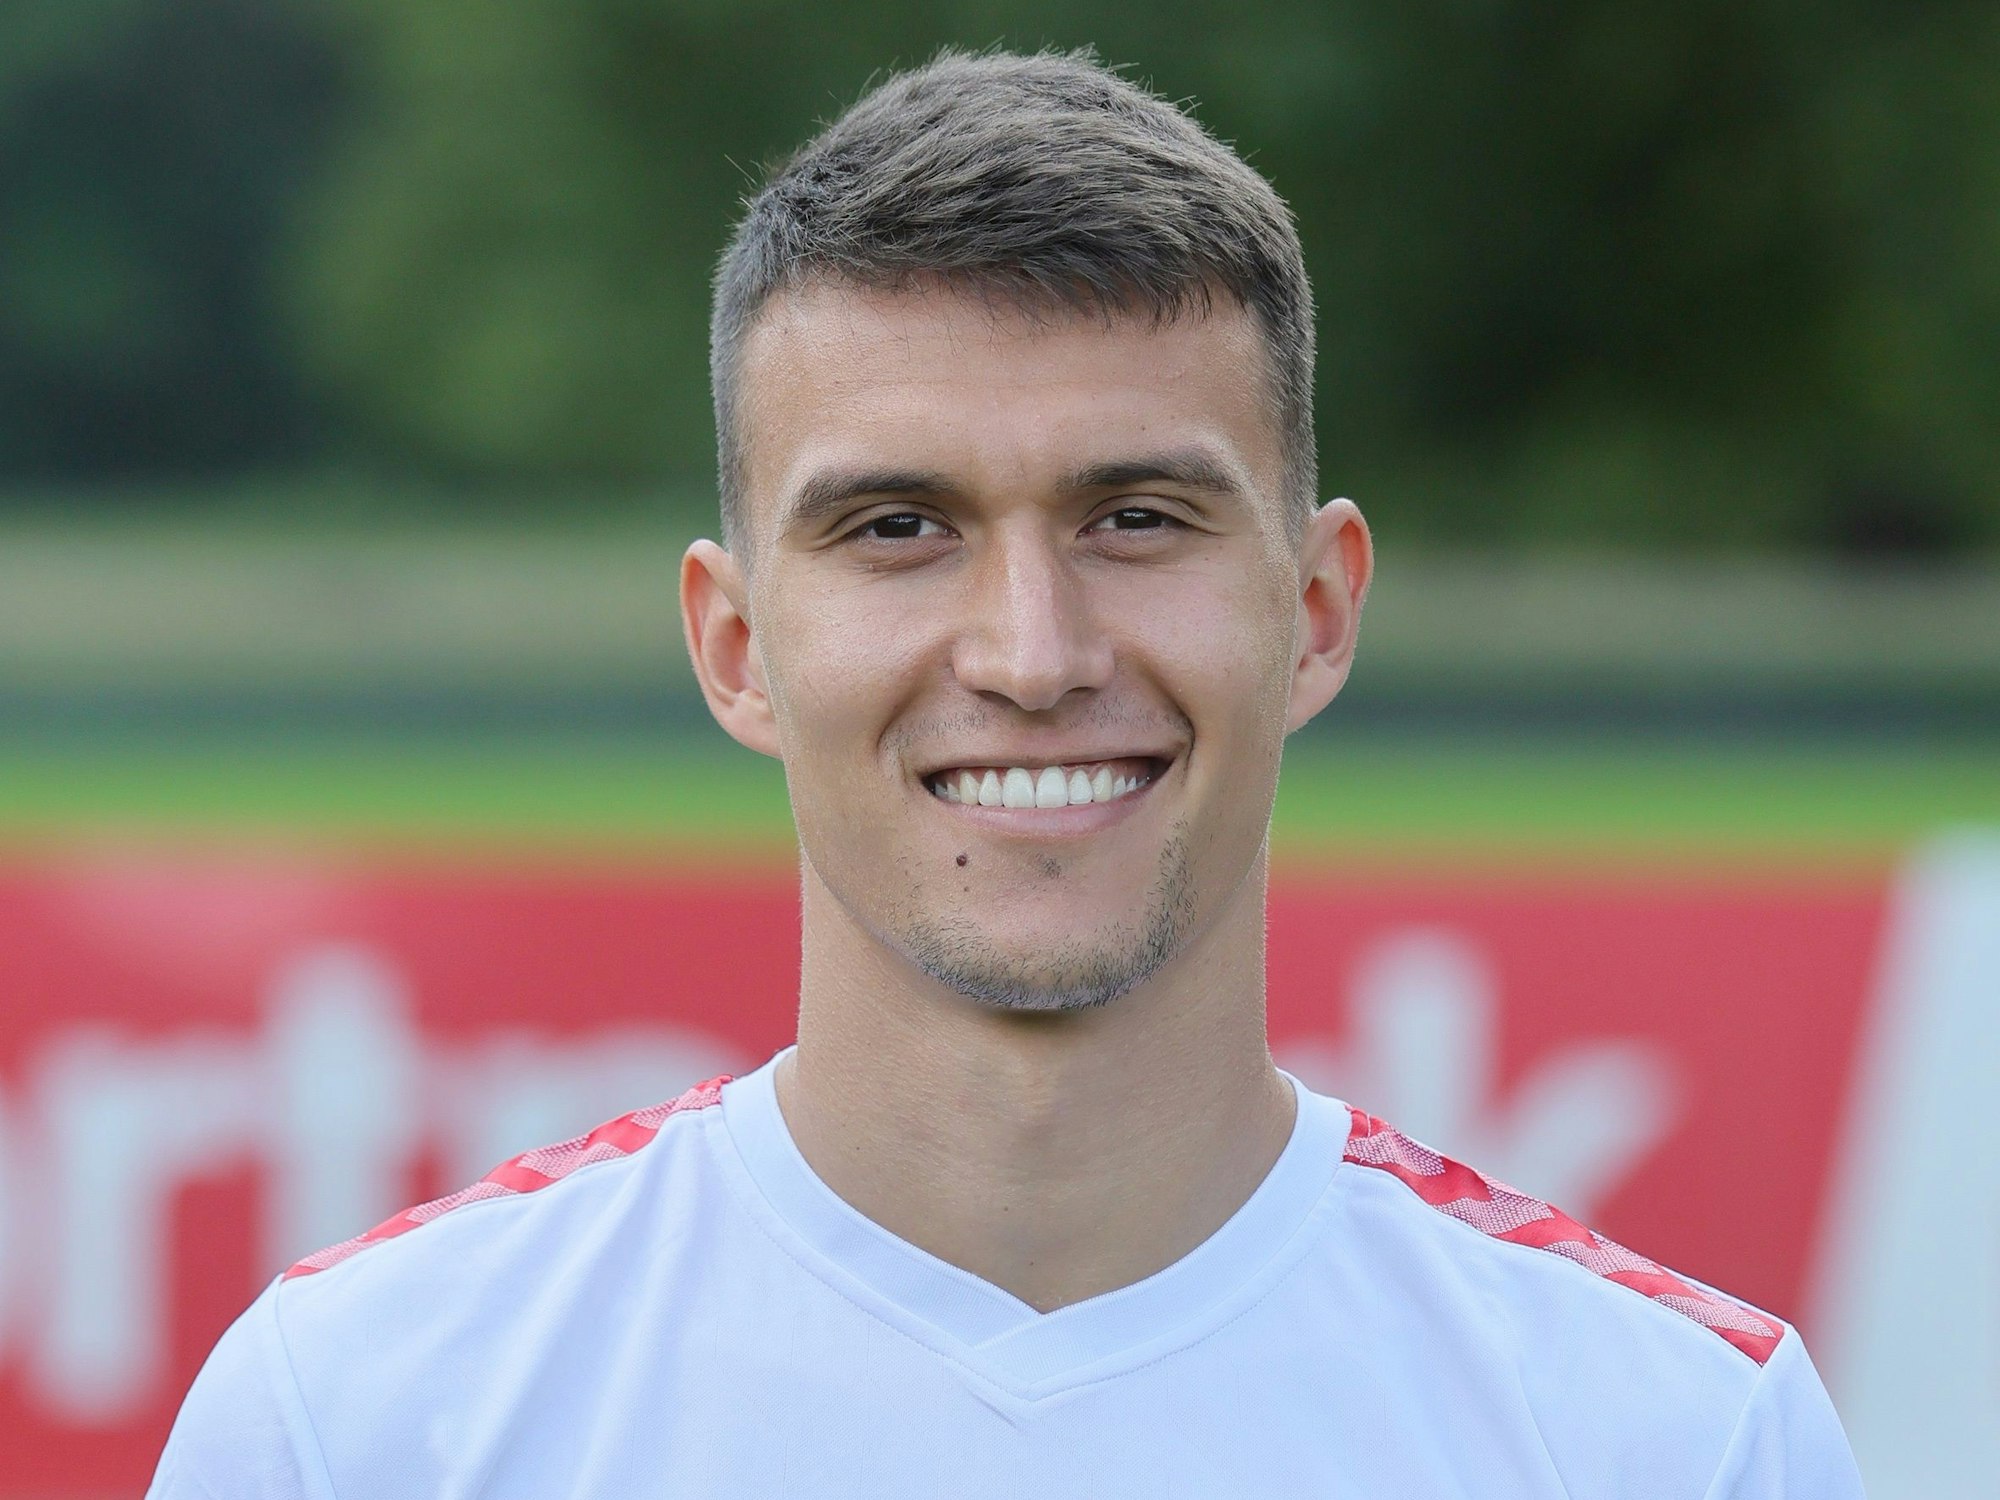 Dejan Ljubicic vom 1. FC Köln im Porträt.